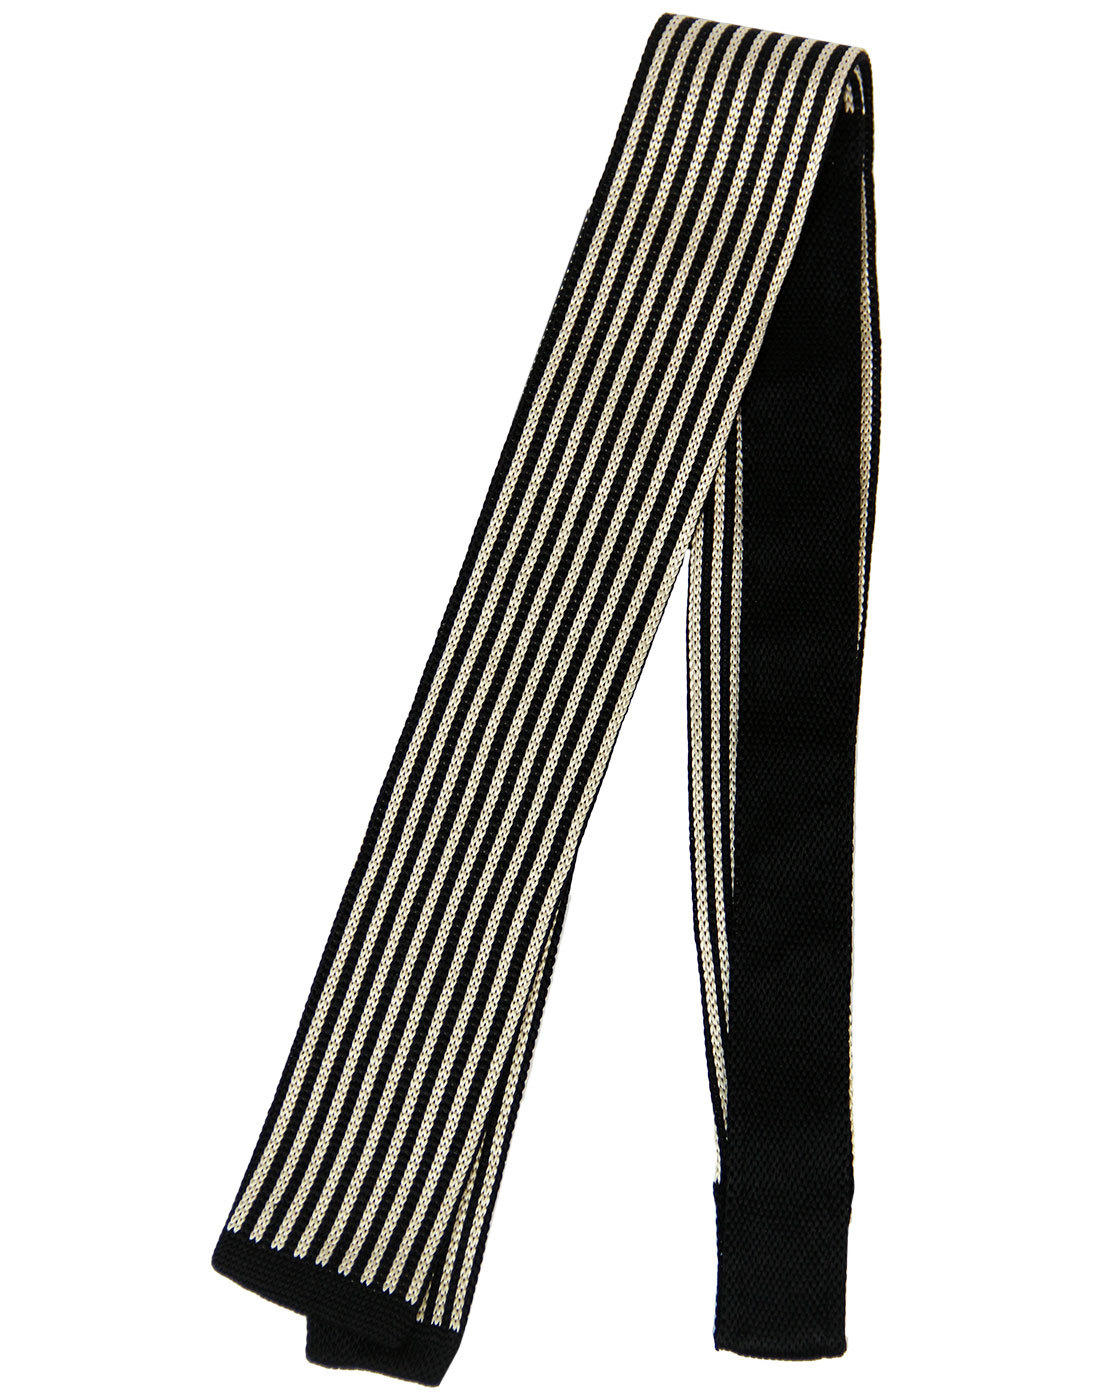 Retro 1960s Mod Silk Stripe Square End Knitted Tie